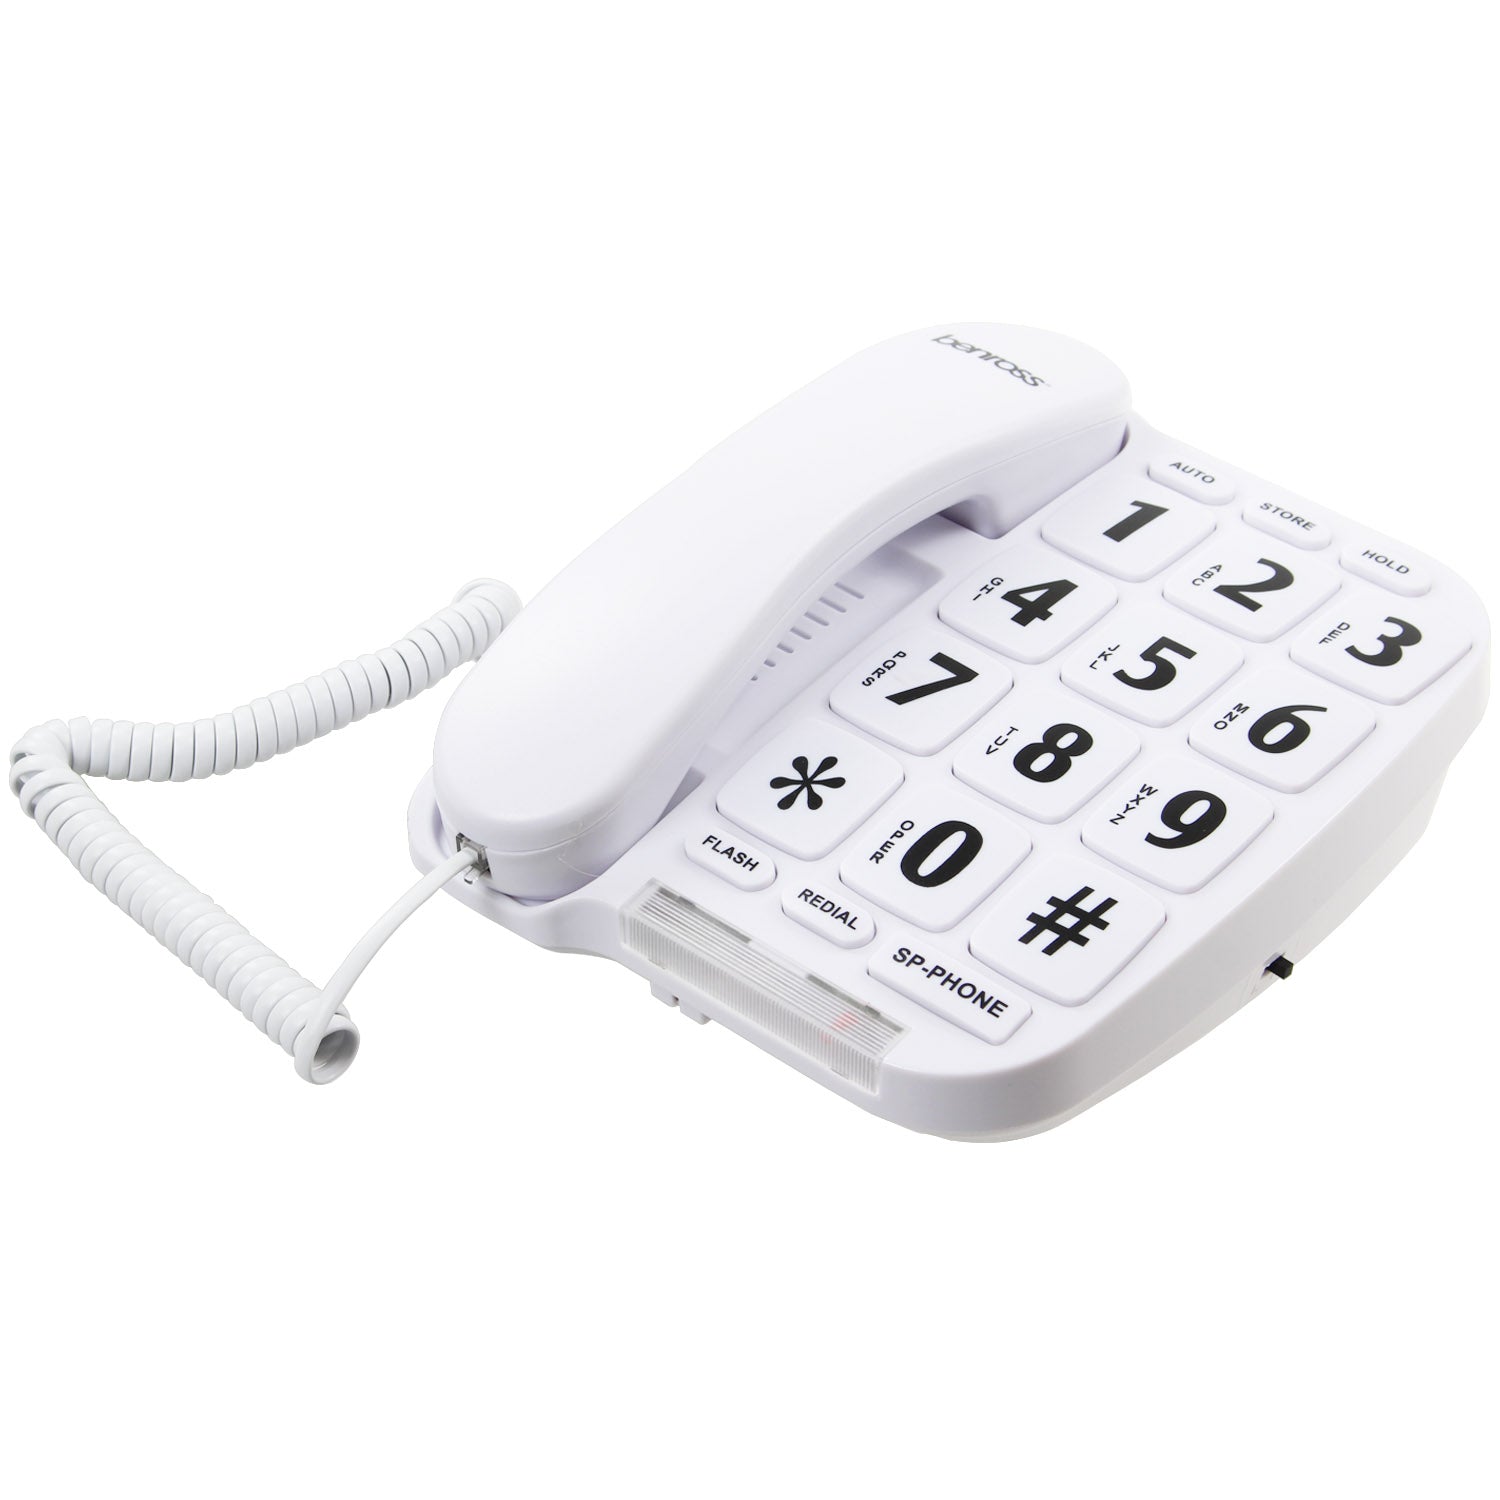 Benross Big Button White Wall Mountable Corded Phone